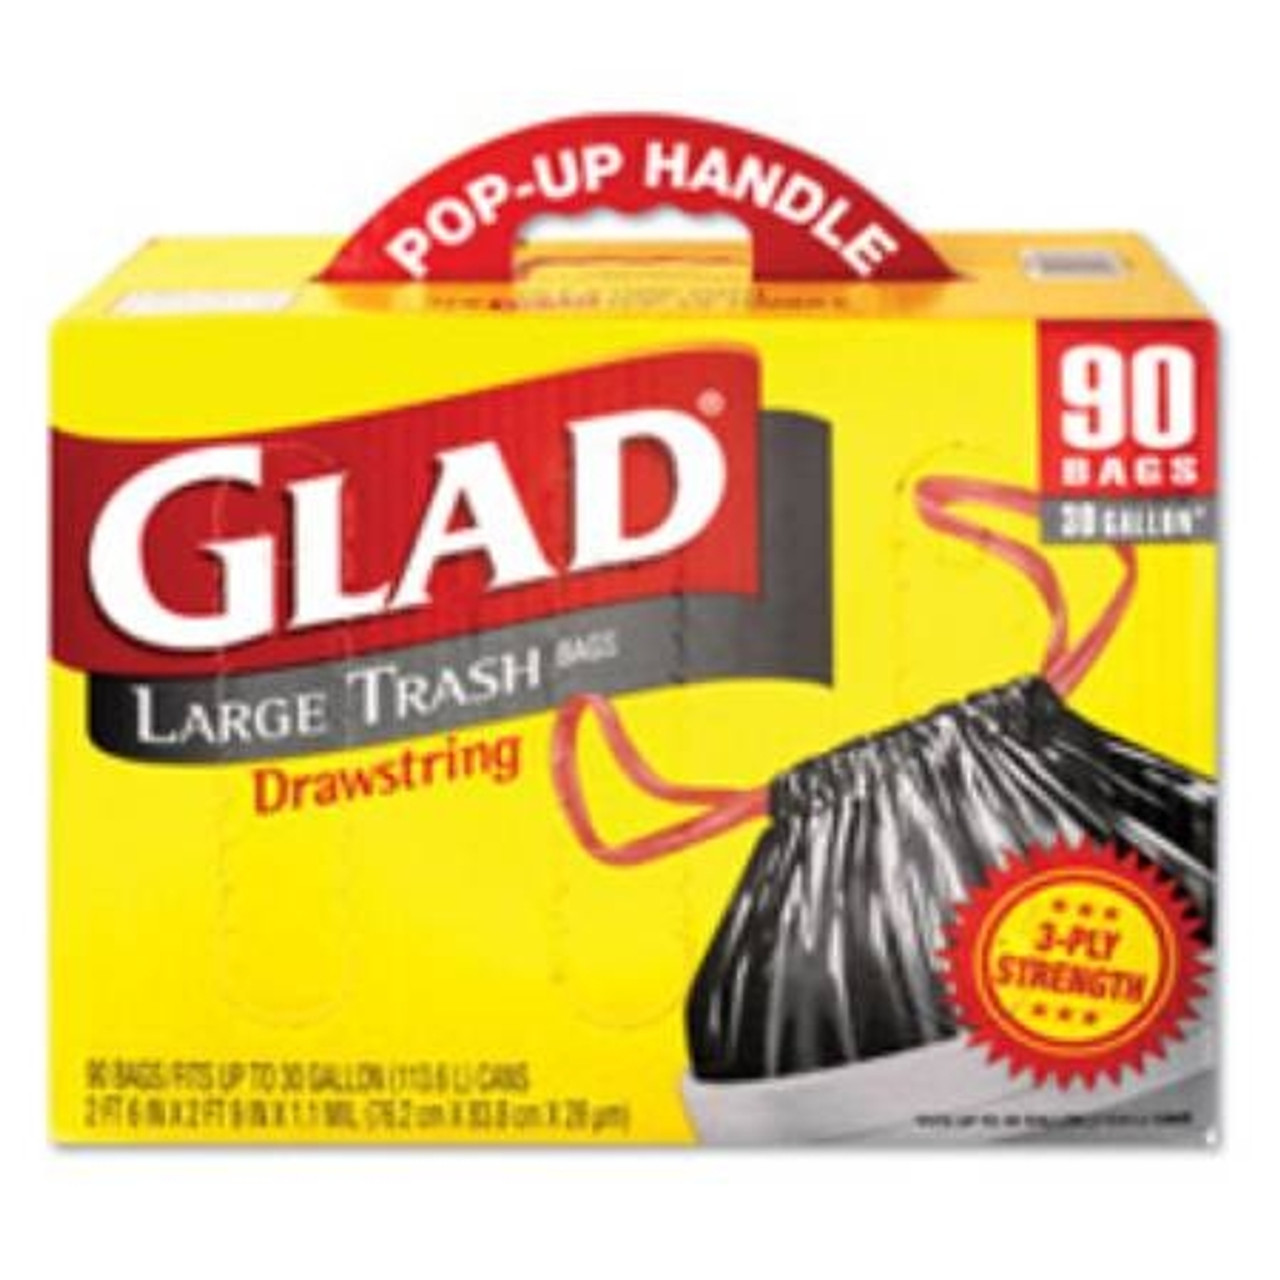 GLAD ForceFlex Large Drawstring Trash Bags, 30 Gallon Black Trash